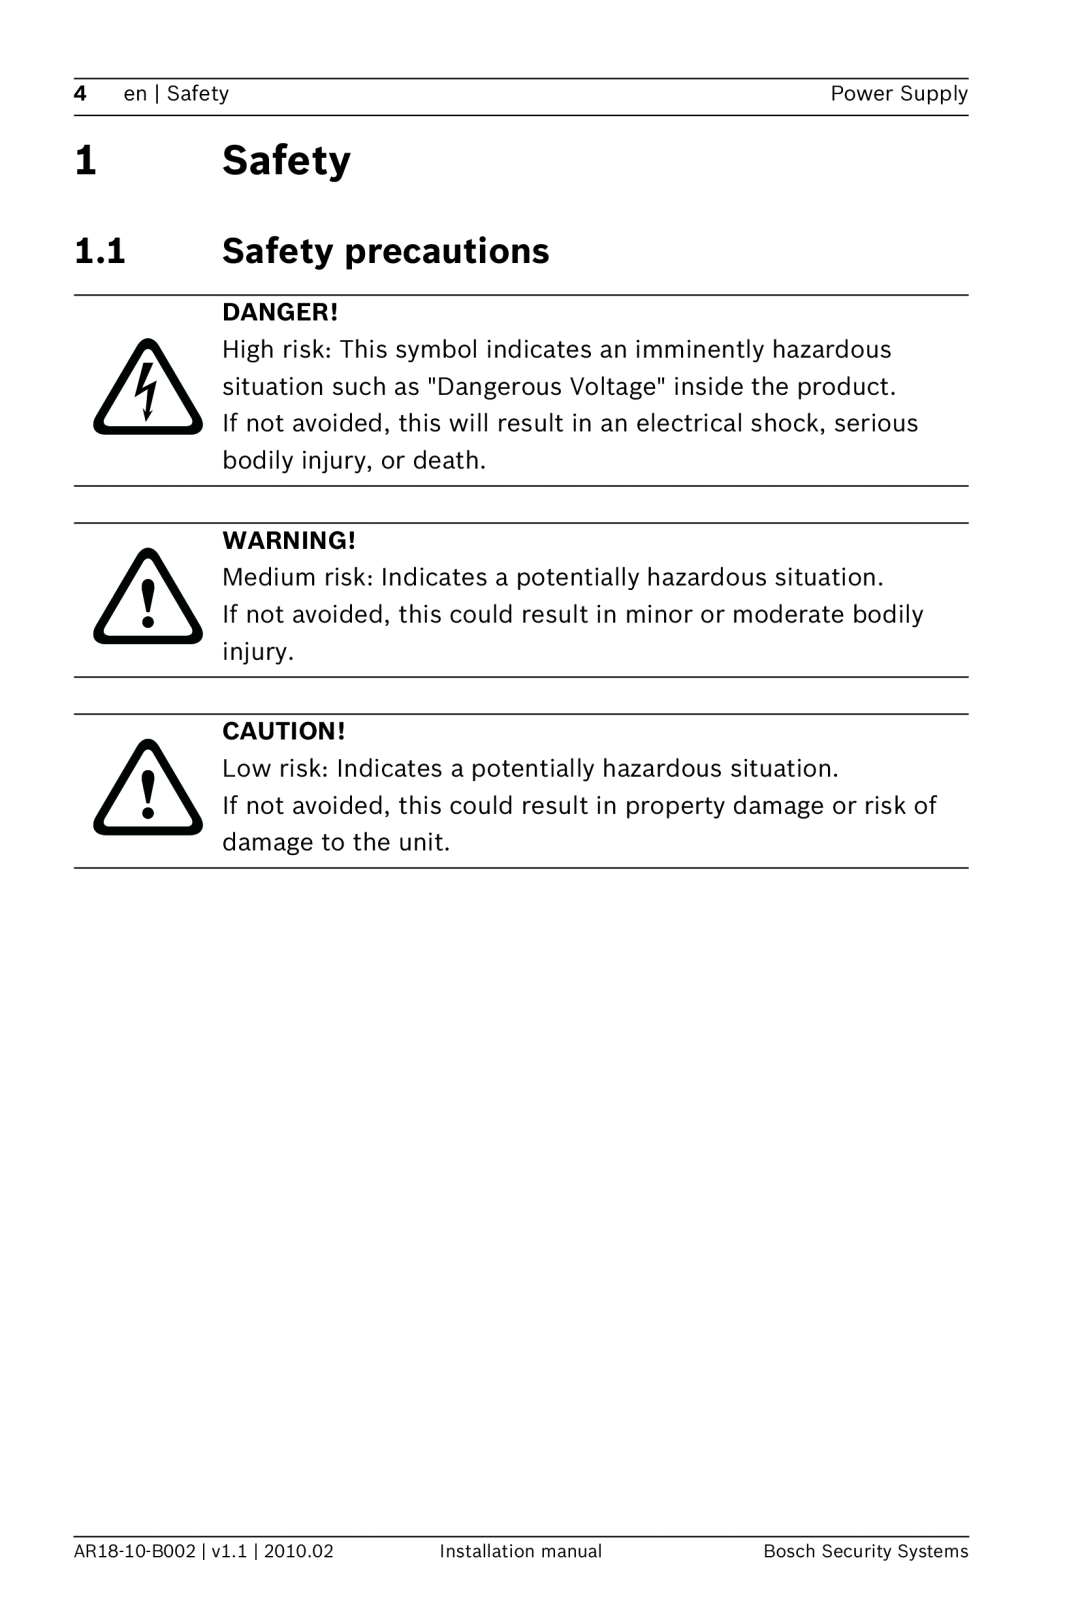 Bosch Appliances PSU-224-DC100 installation manual Safety precautions, Danger 